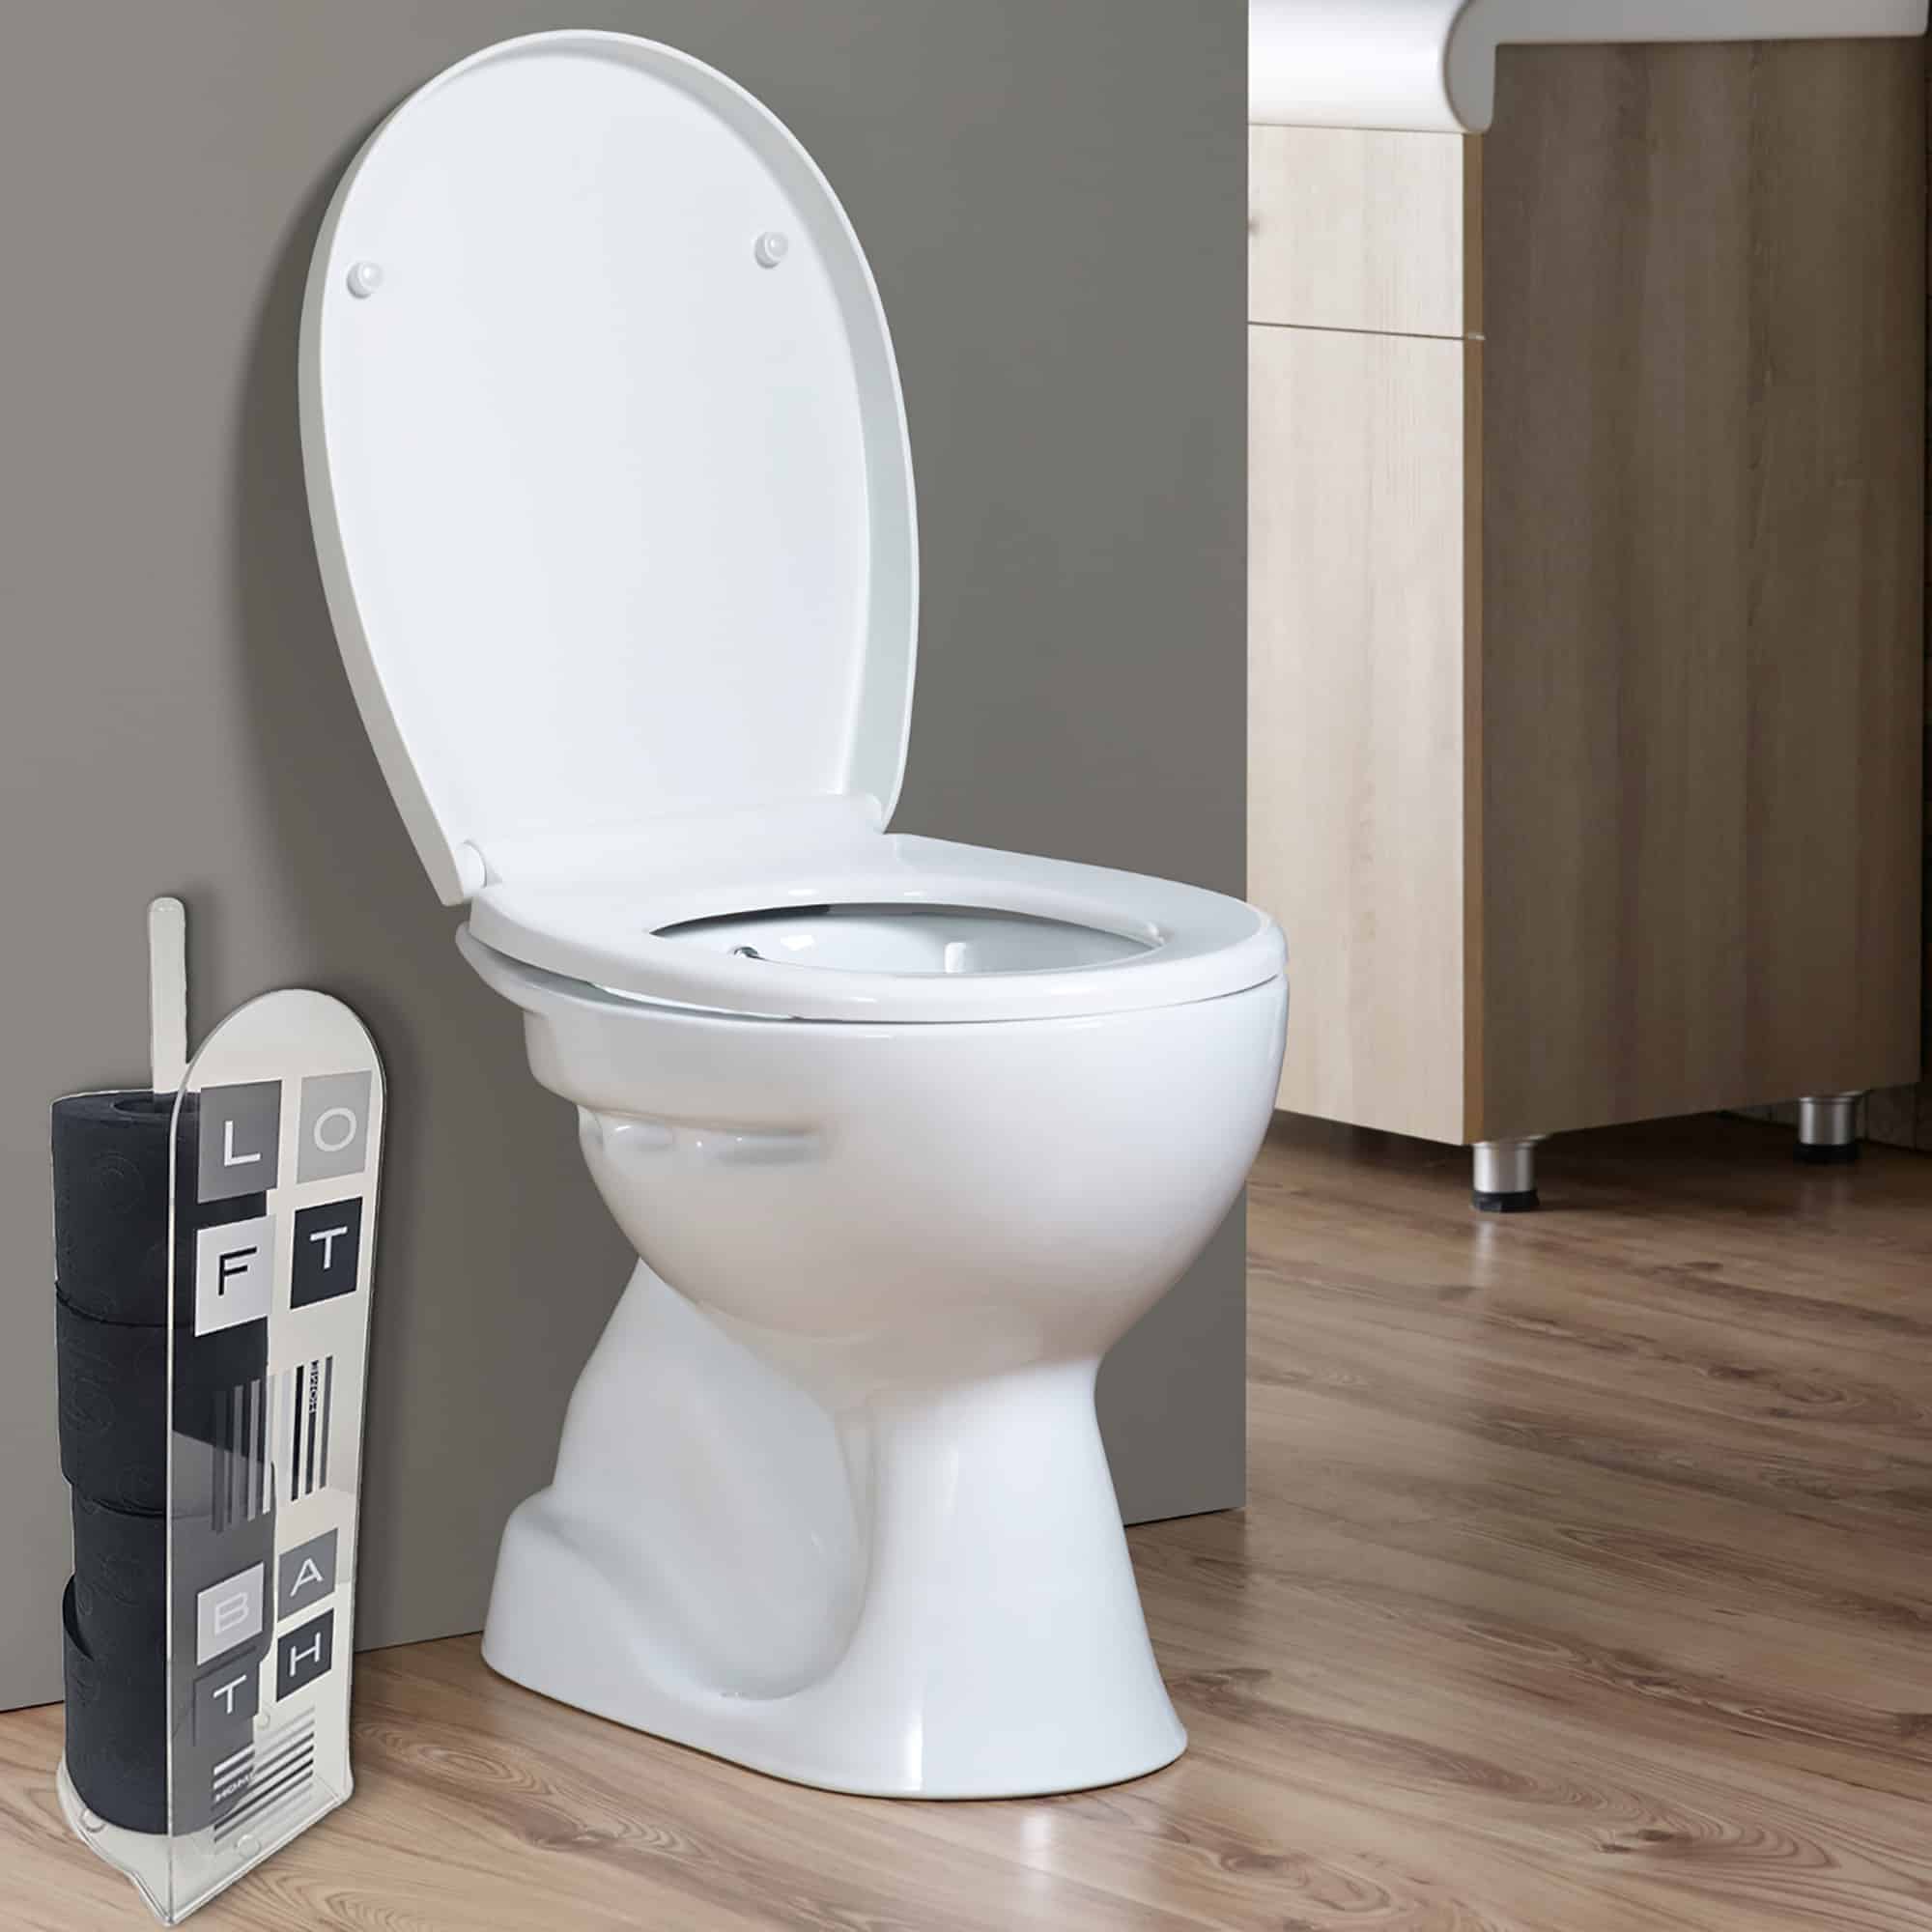 Elegant bathroom interior with white toilet and freestanding 'LOFT BATH' toilet paper holder alongside